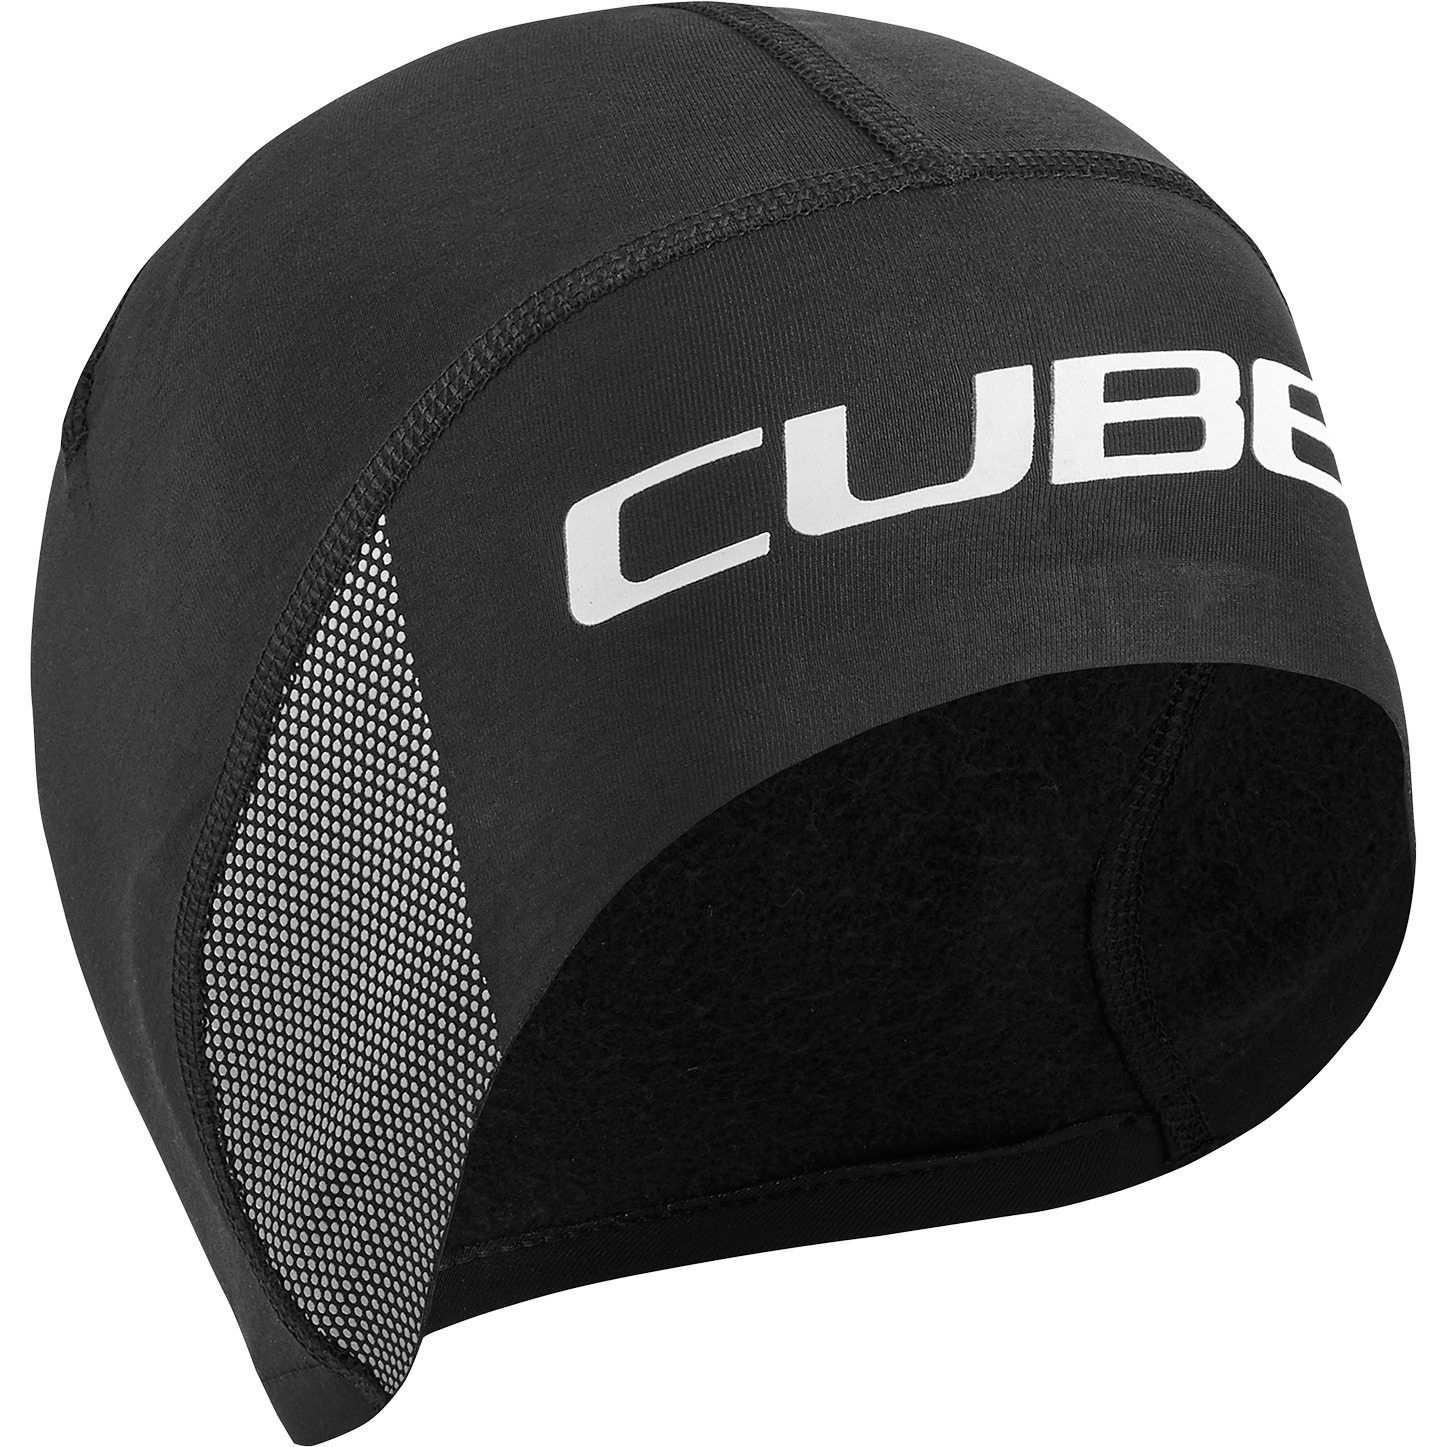 Picture of CUBE Helmet Hat - black